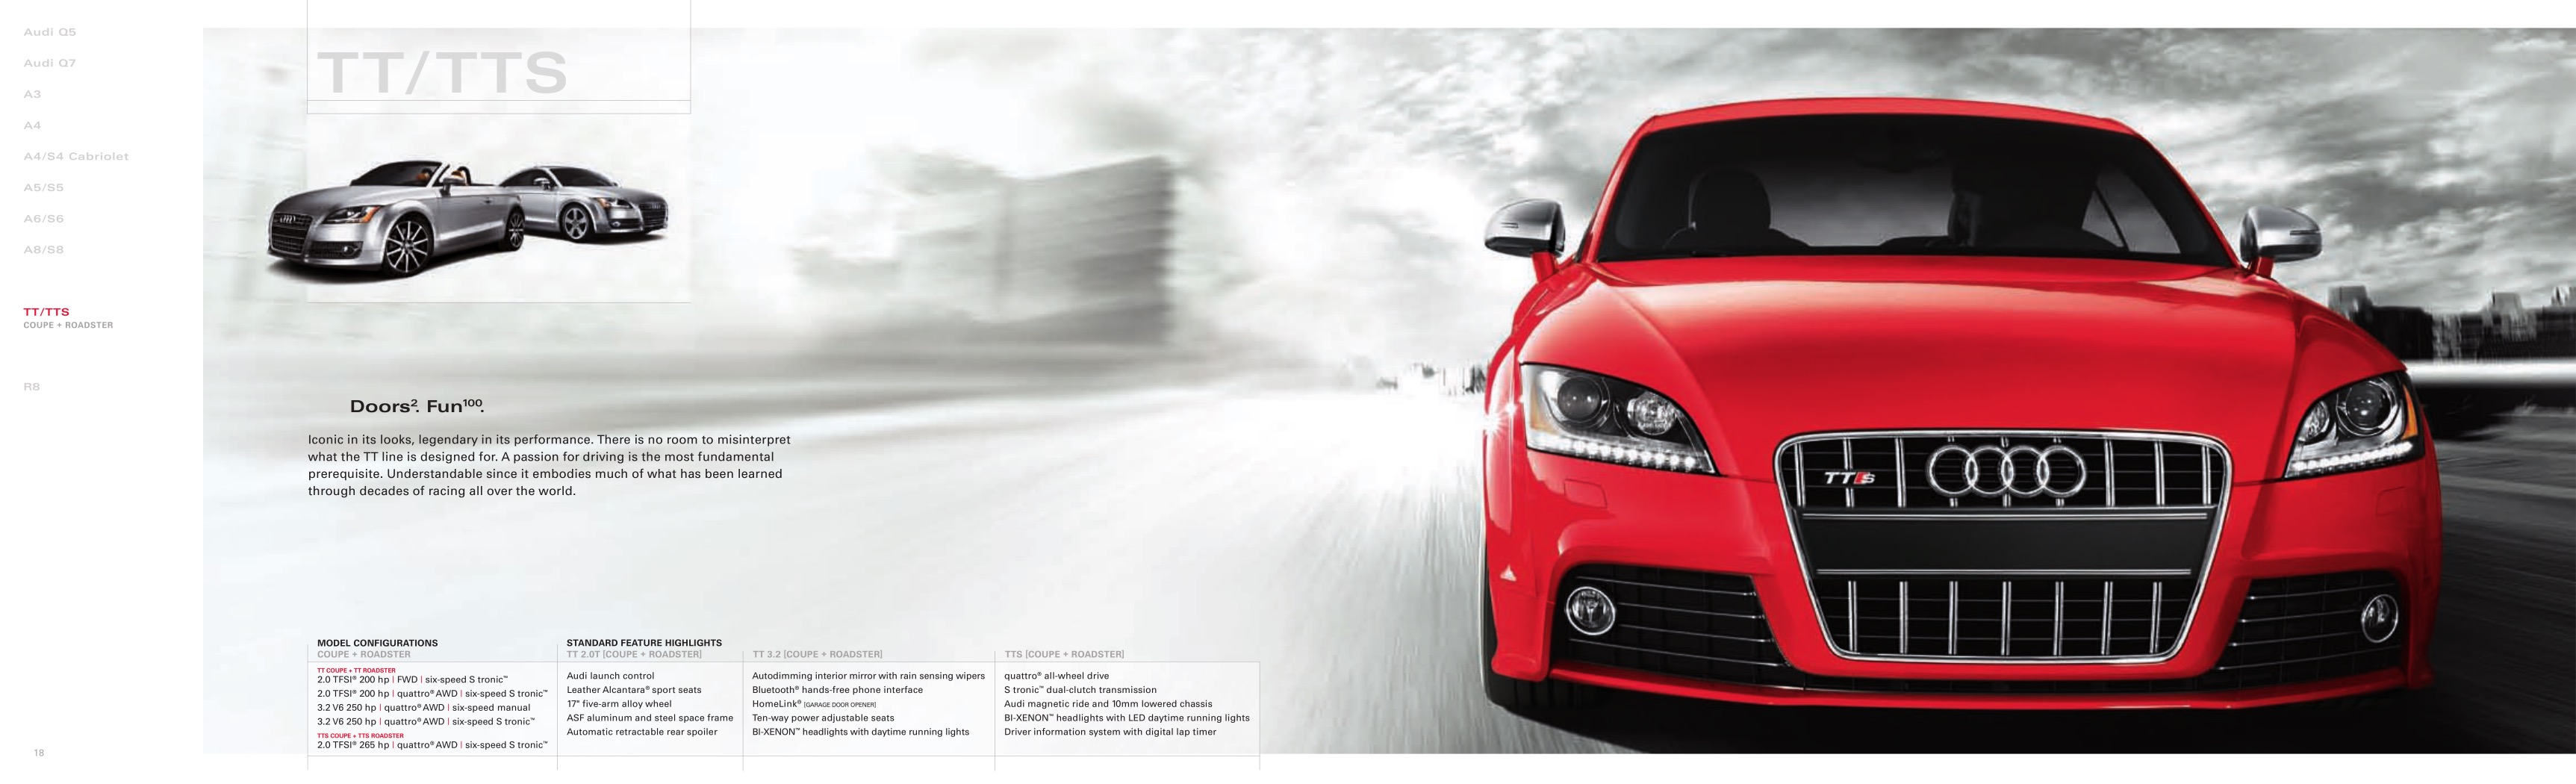 2009 Audi Brochure Page 8